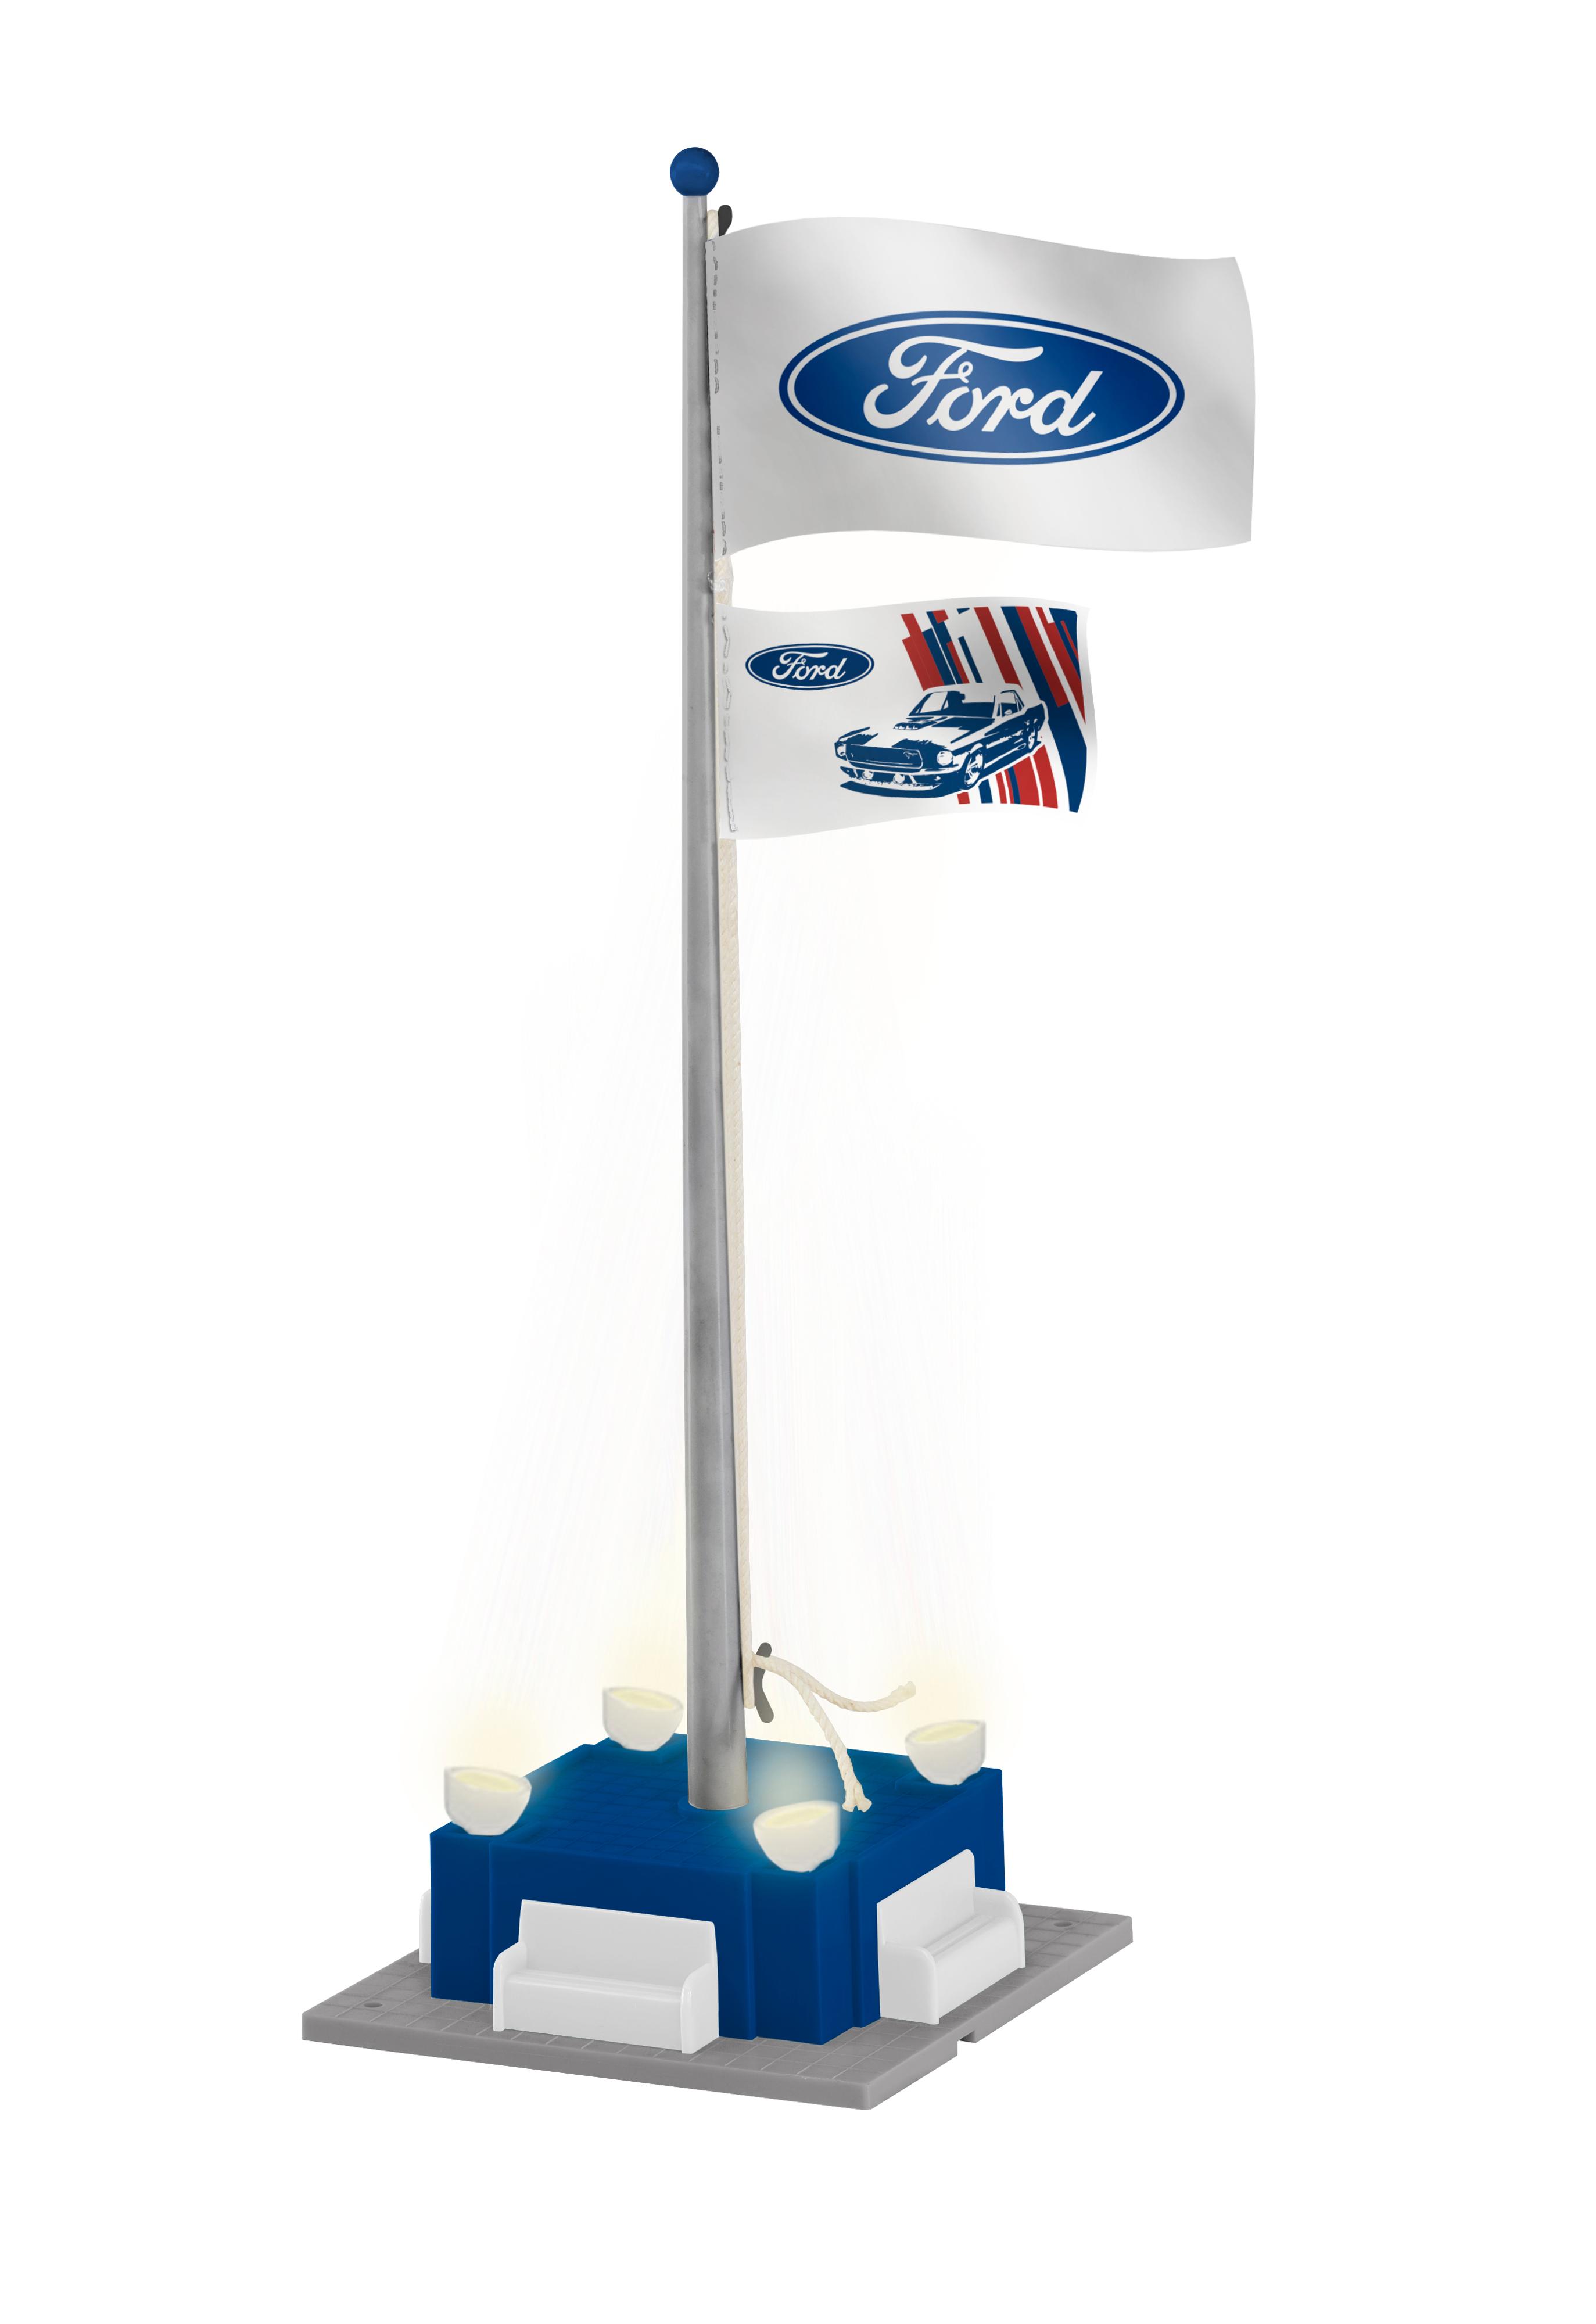 Lionel O-Scale Ford Flagpole